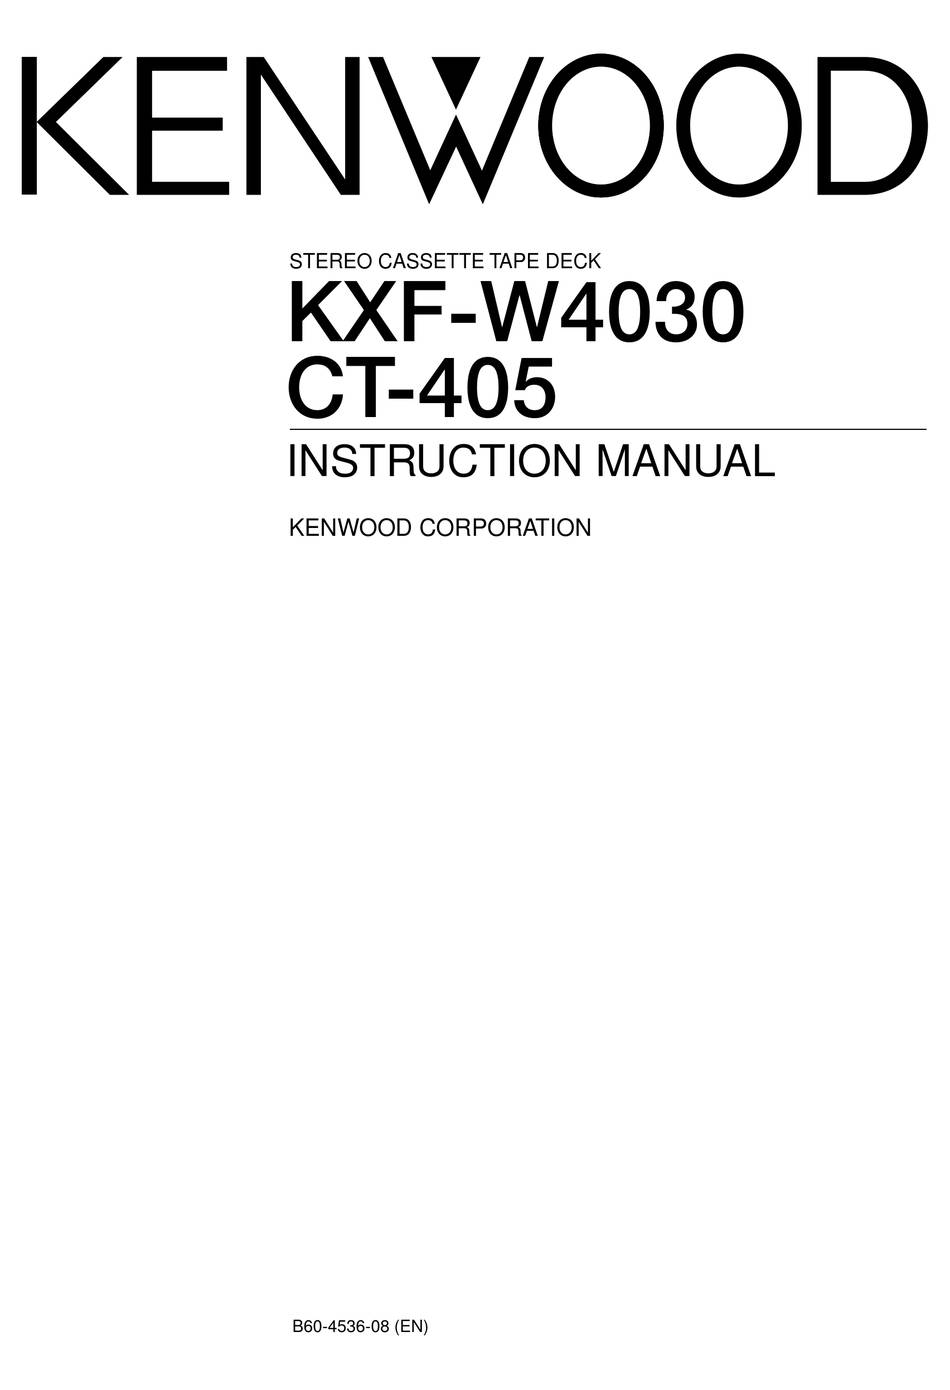 Kenwood KXF-W4030